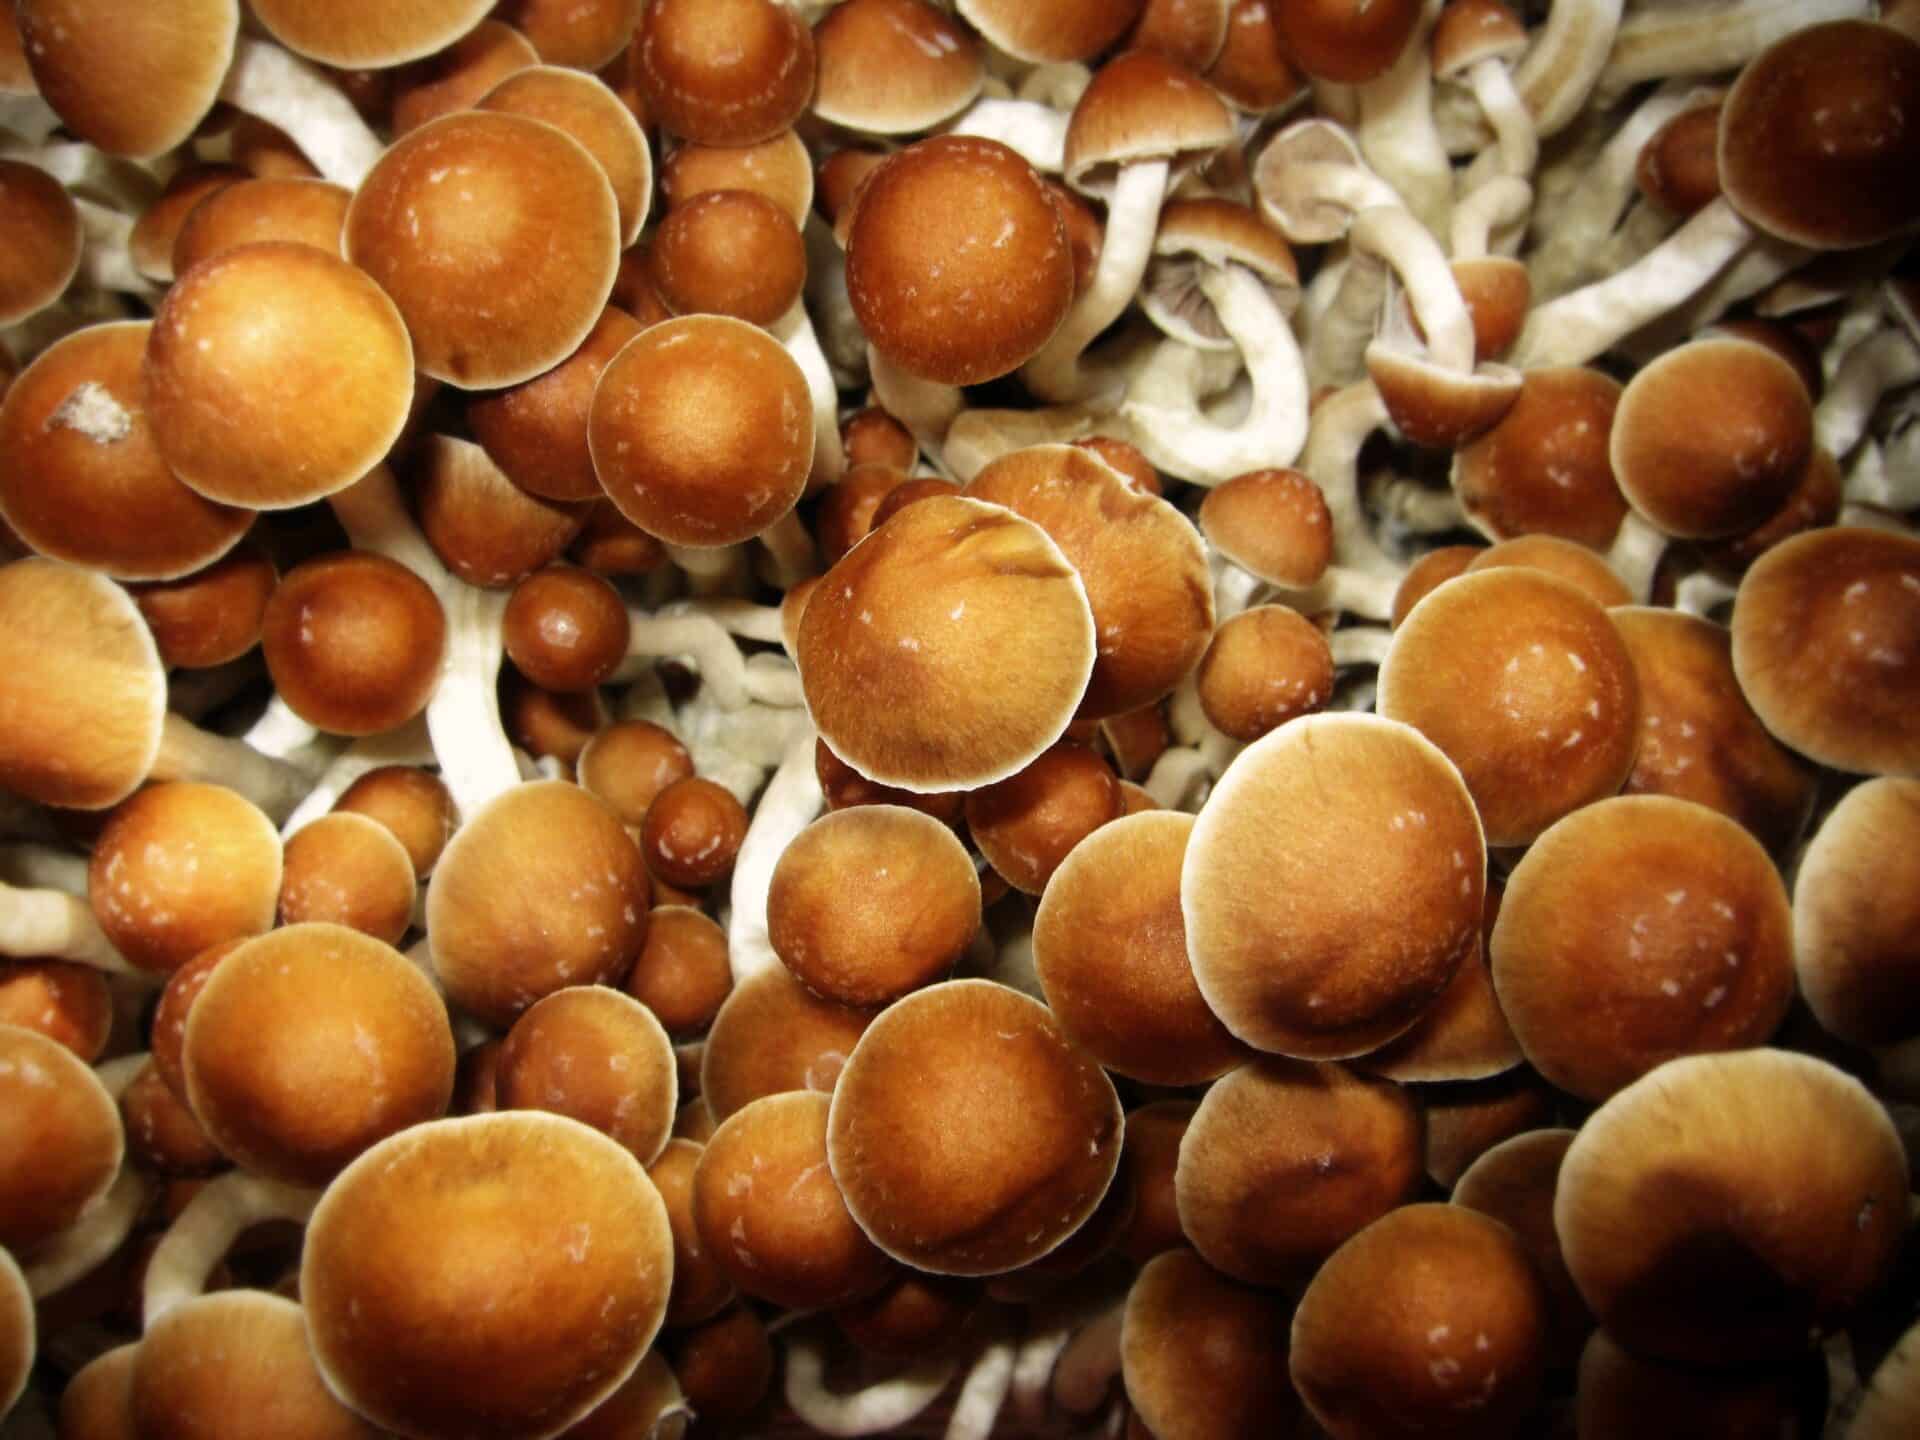 How to use magic mushrooms